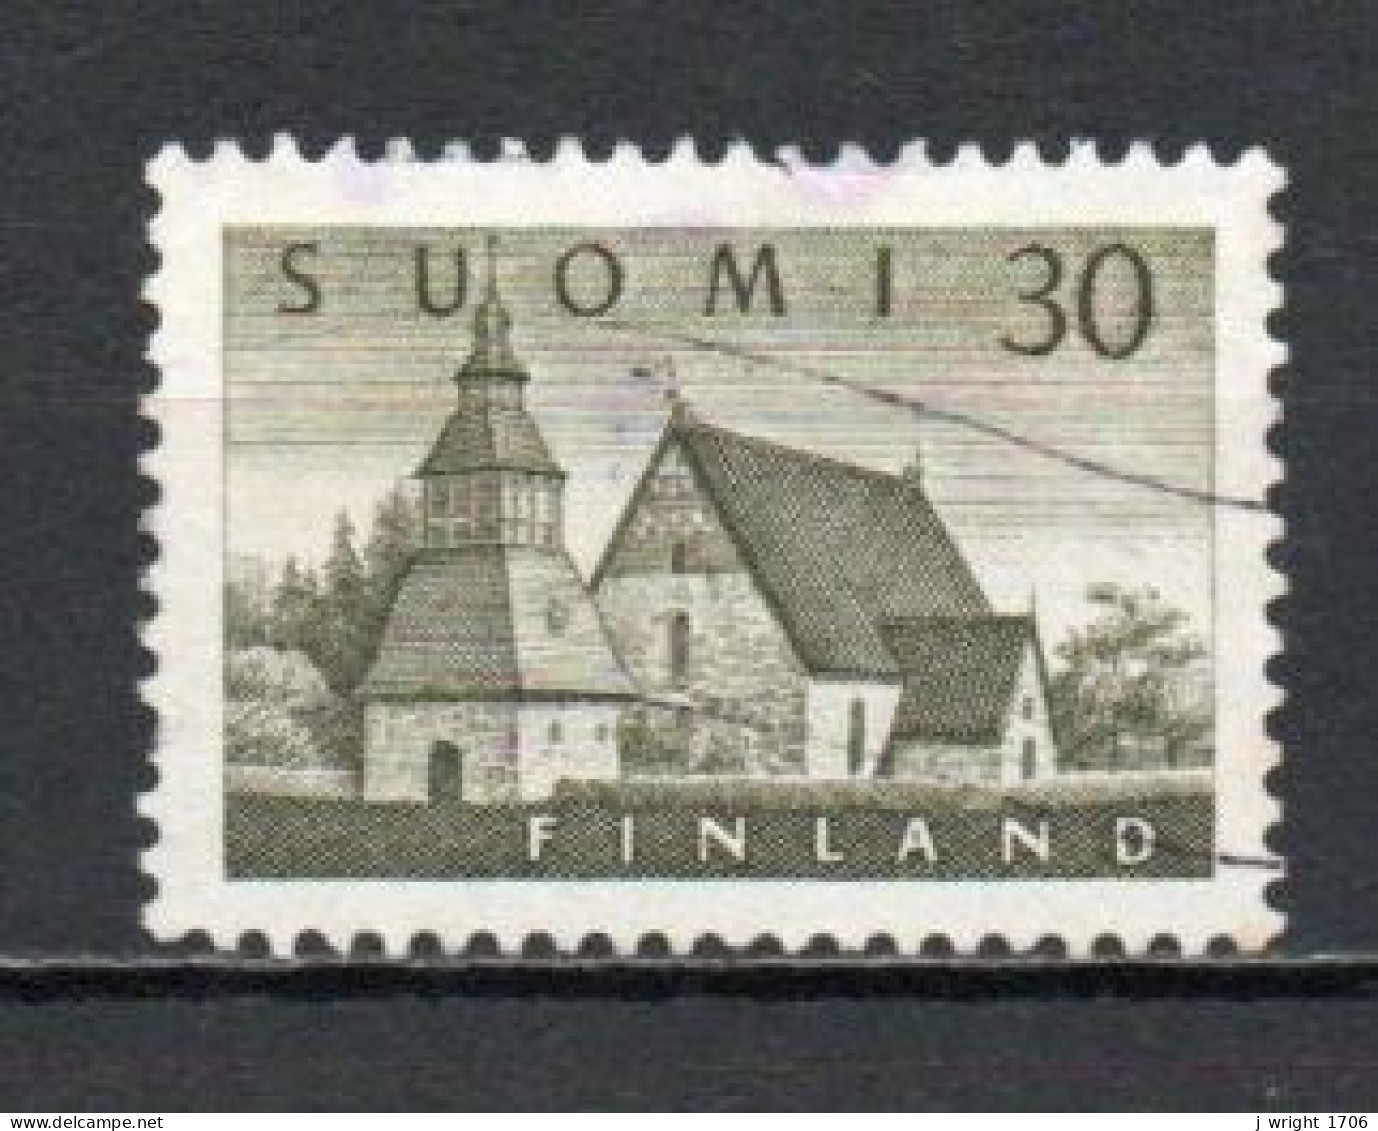 Finland, 1956, Lammi Church, 30mk, USED - Oblitérés